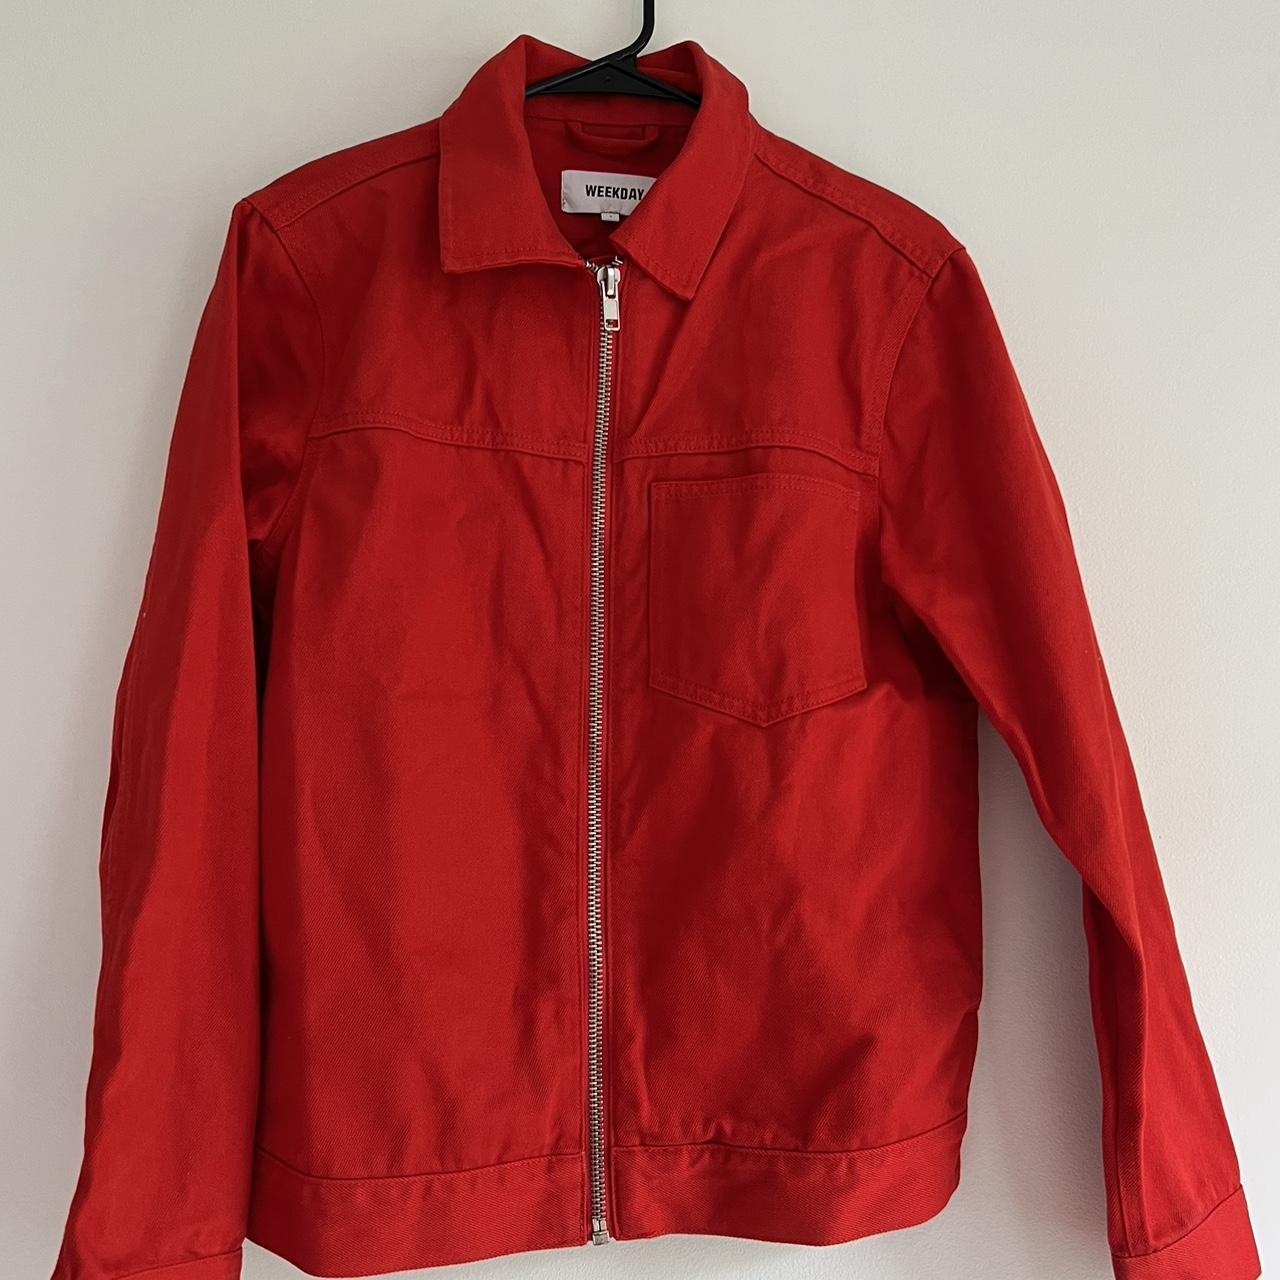 Weekday Women's Red Jacket (2)